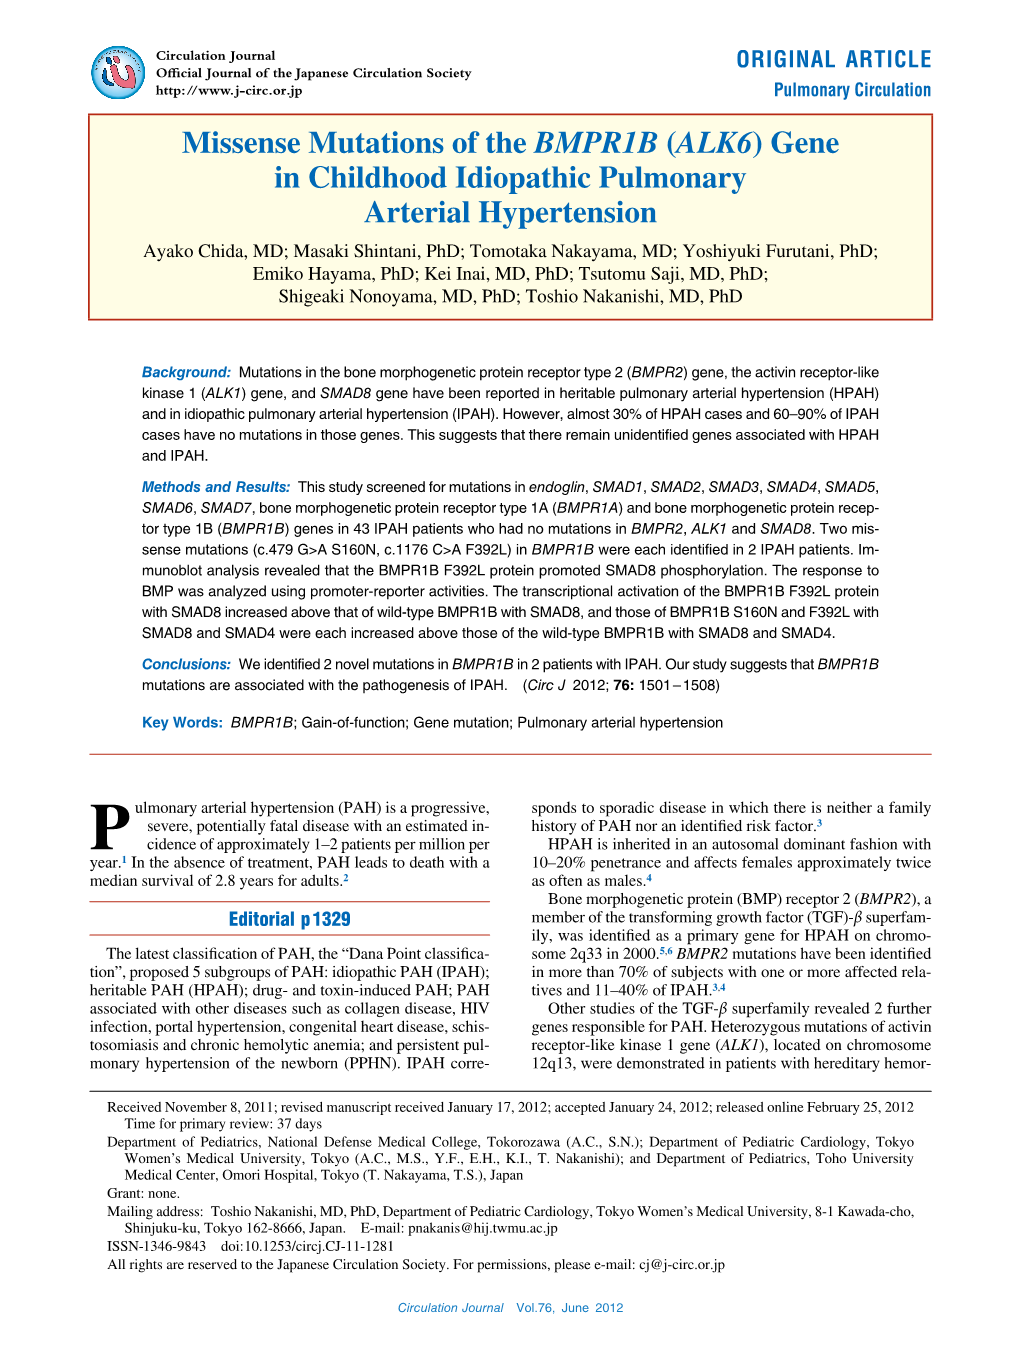 Missense Mutations of the BMPR1B (ALK6) Gene in Childhood Idiopathic Pulmonary Arterial Hypertension